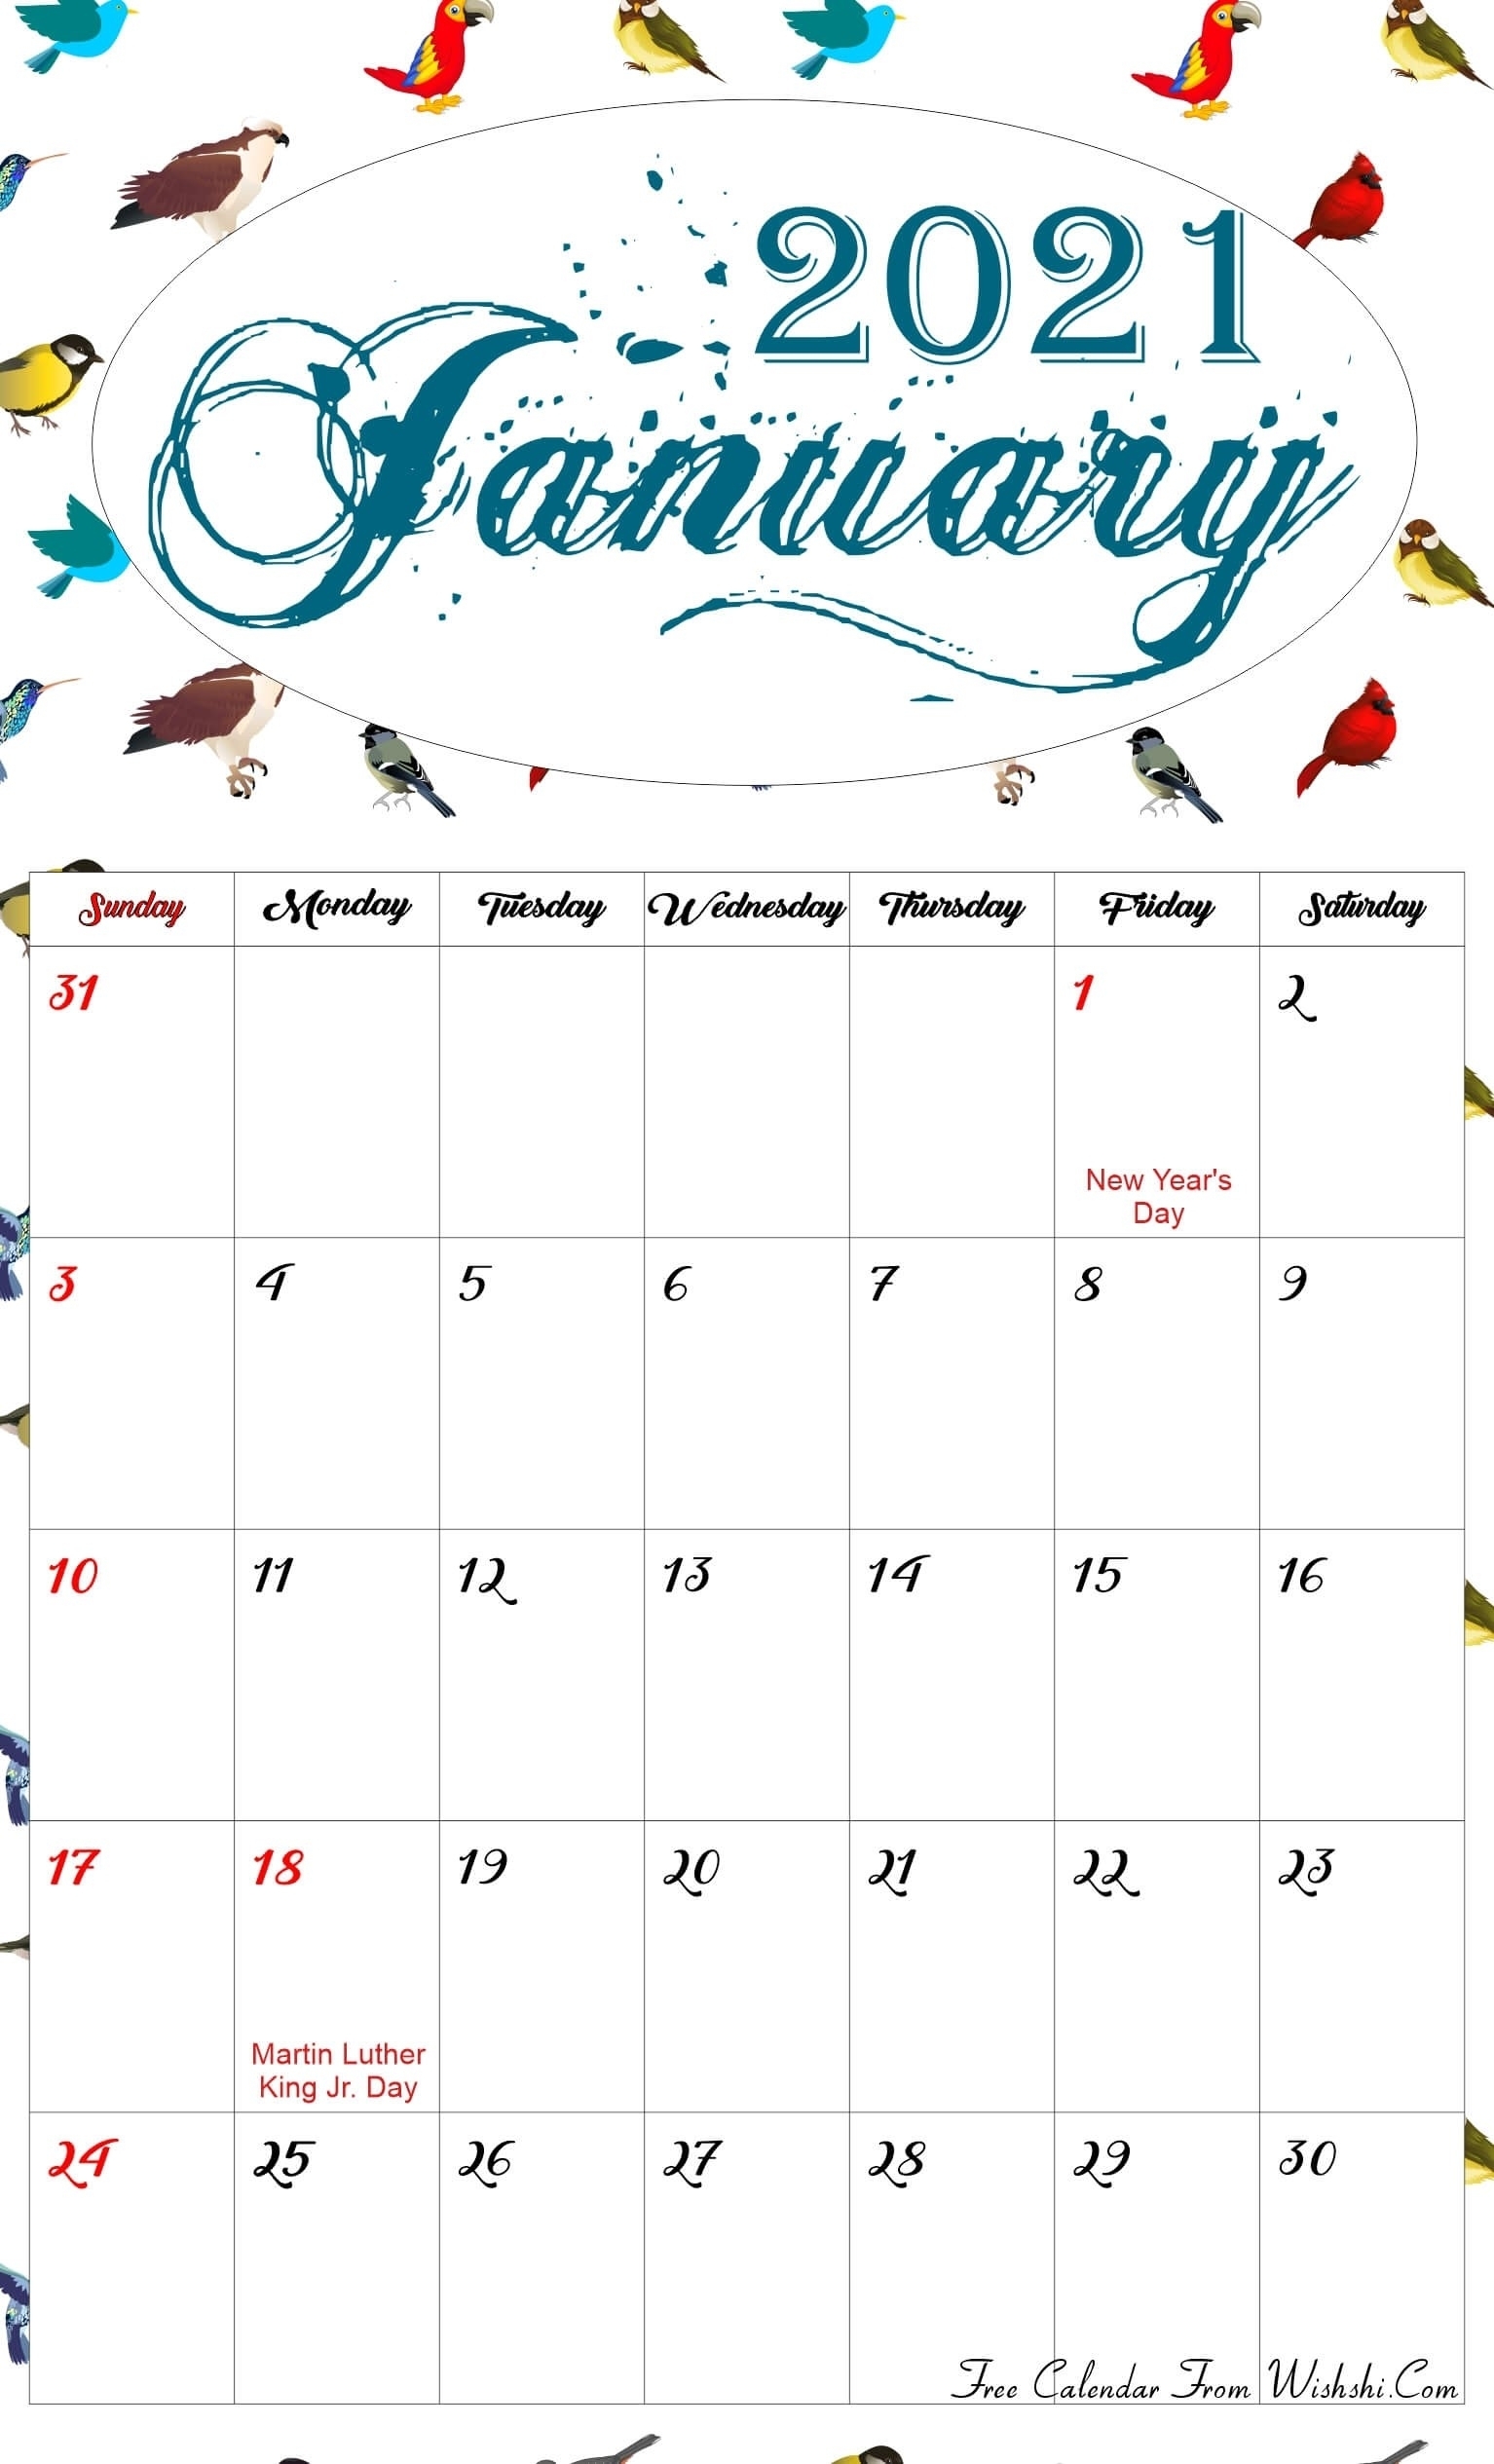 July 2021 Printable Calendar Girly - Template Calendar Design